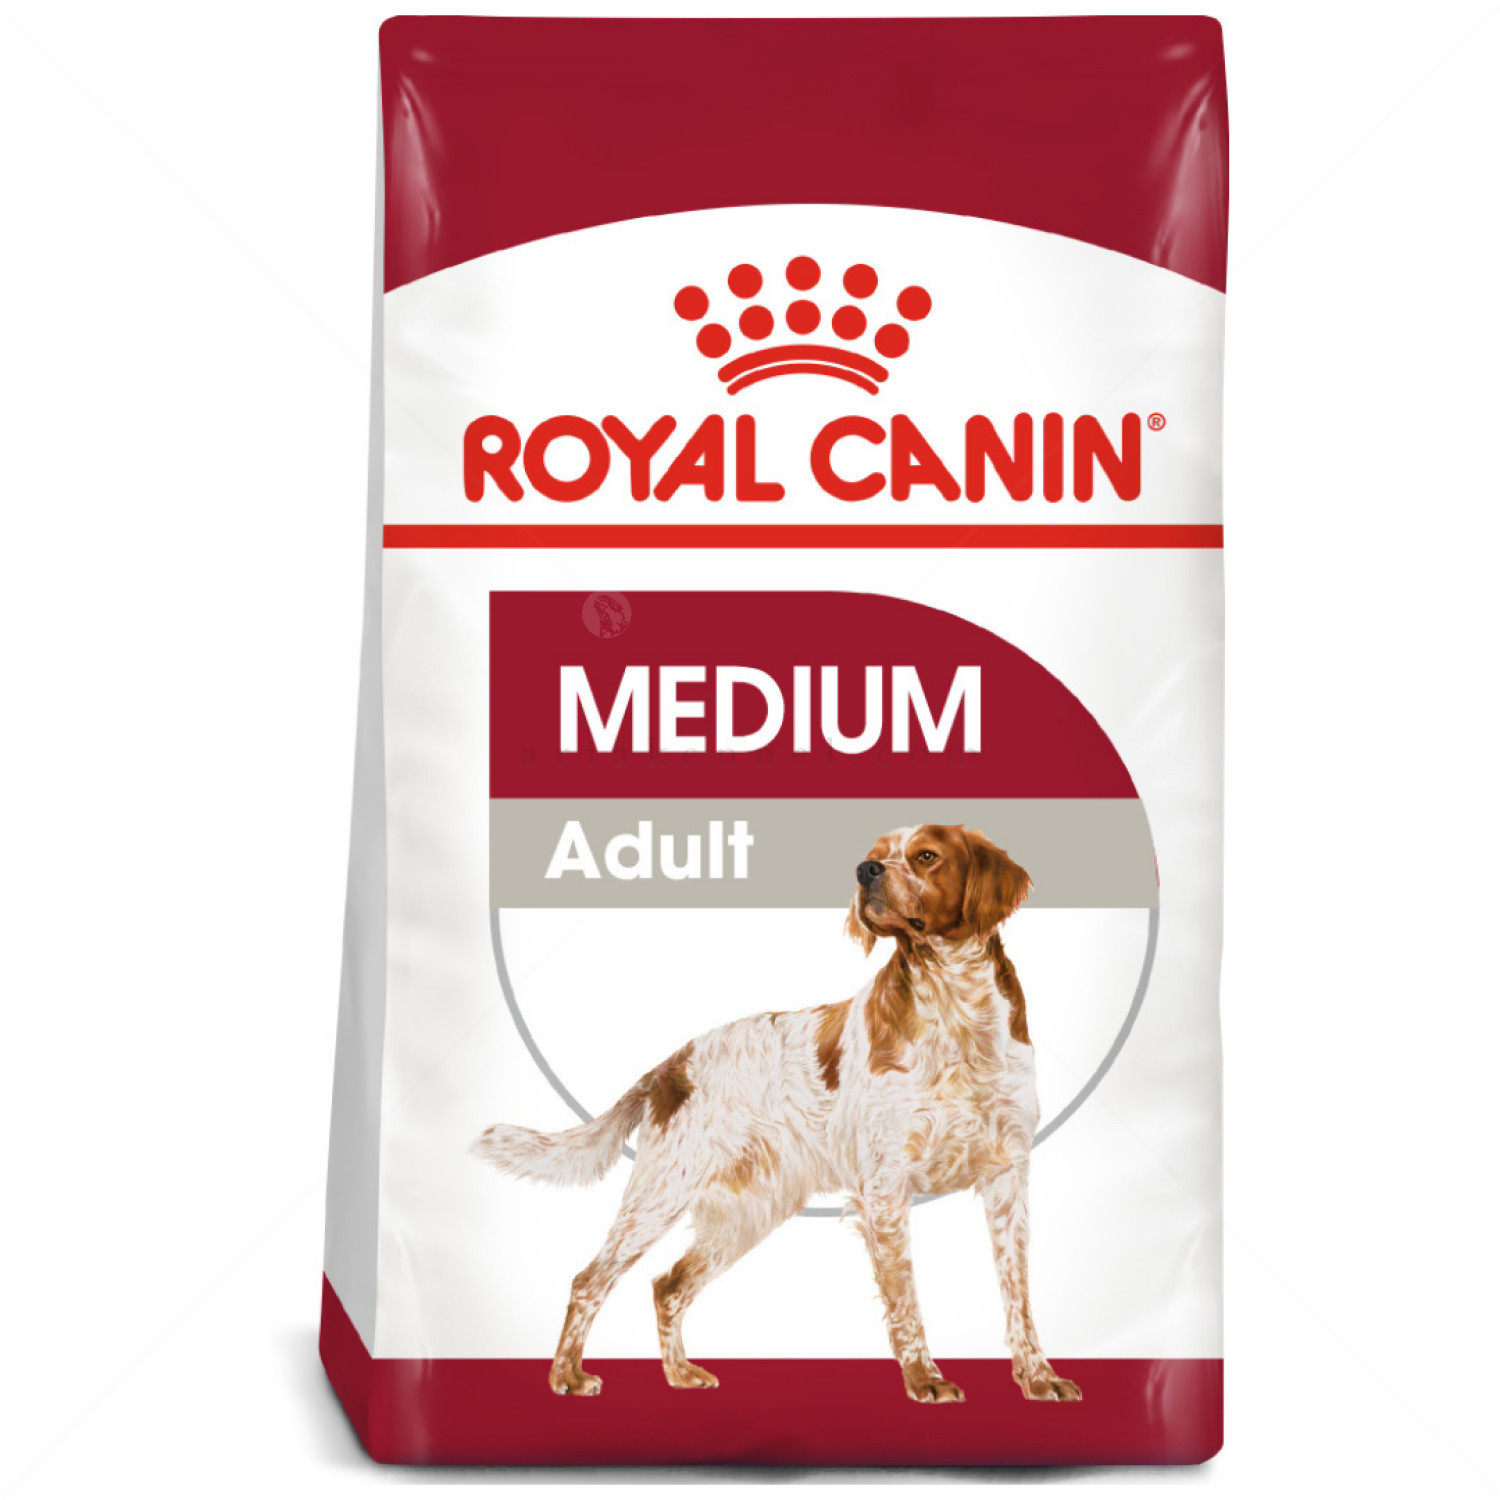 ROYAL CANIN Medium Adult - 15 кг